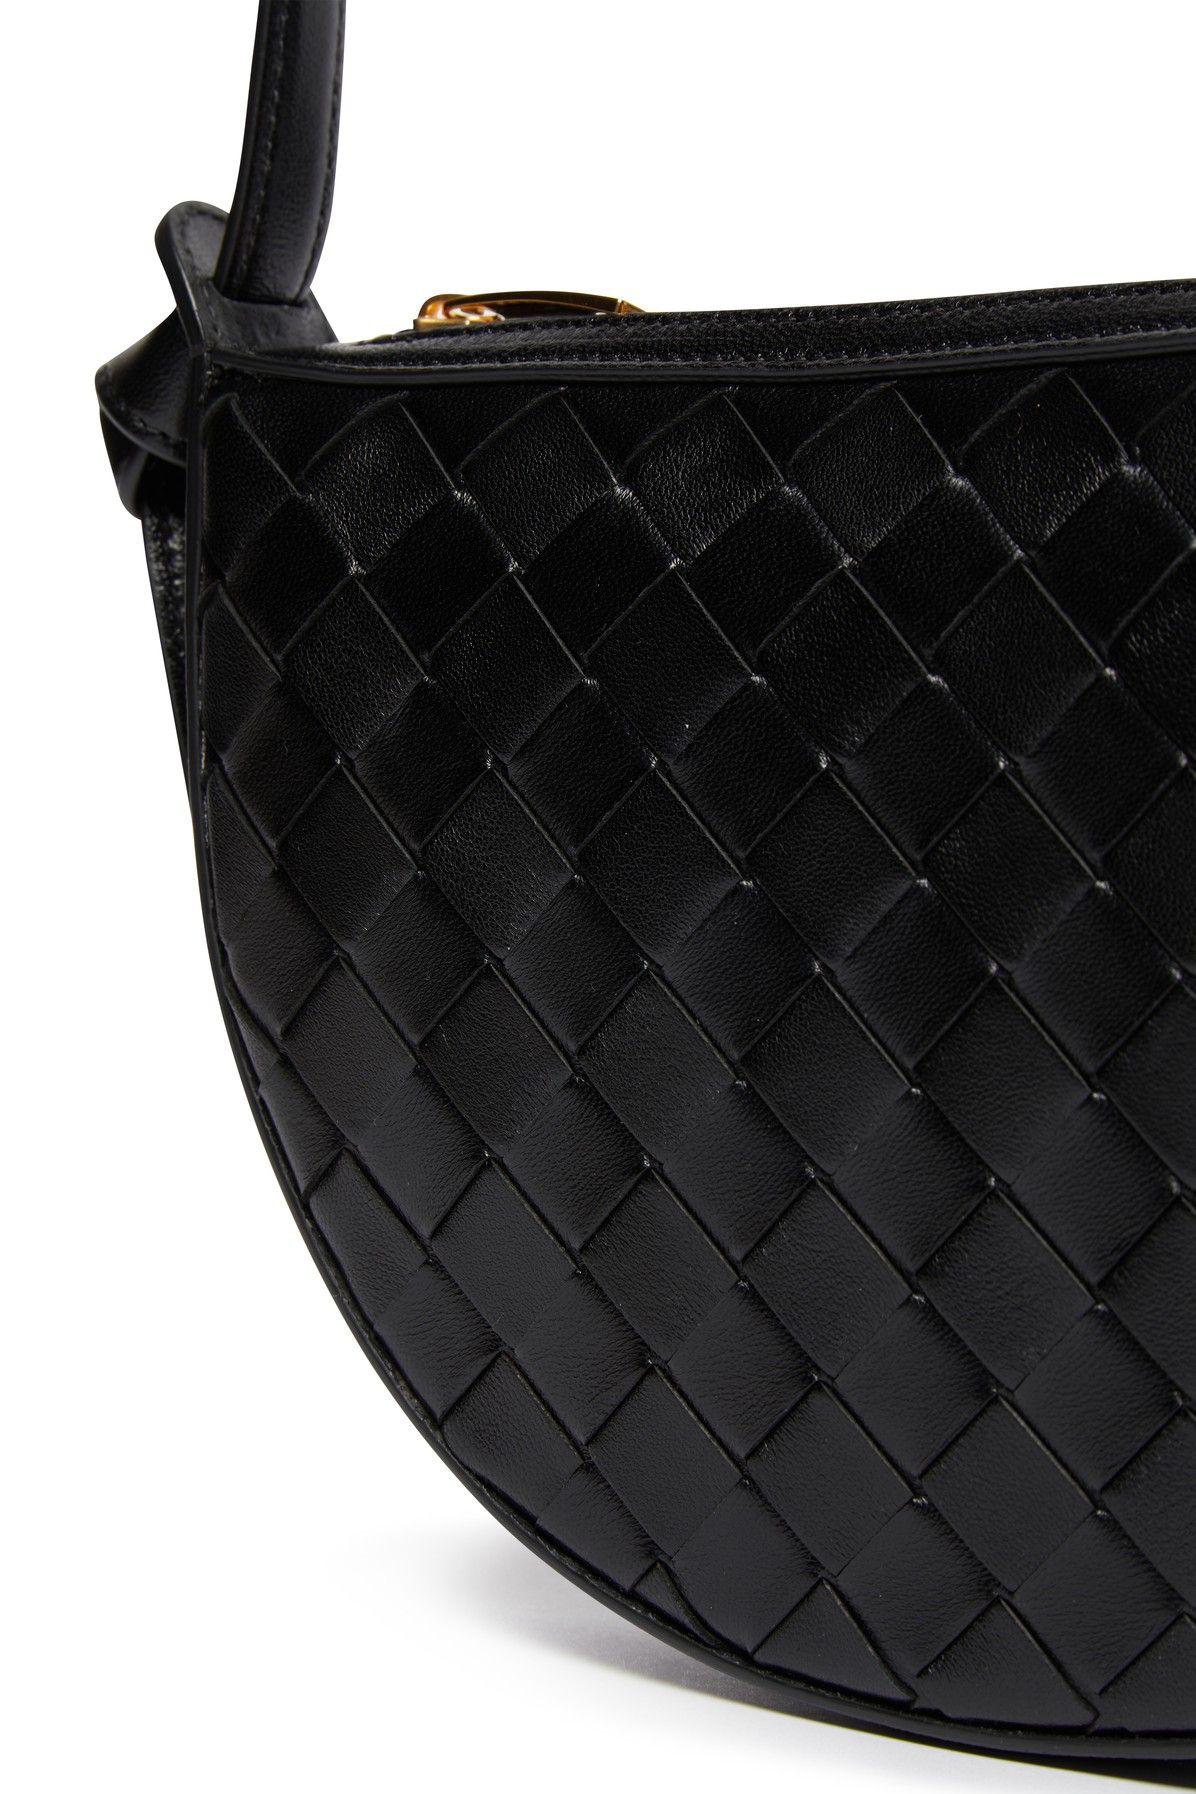 Half Moon Leather Shoulder Bag in Black - Bottega Veneta